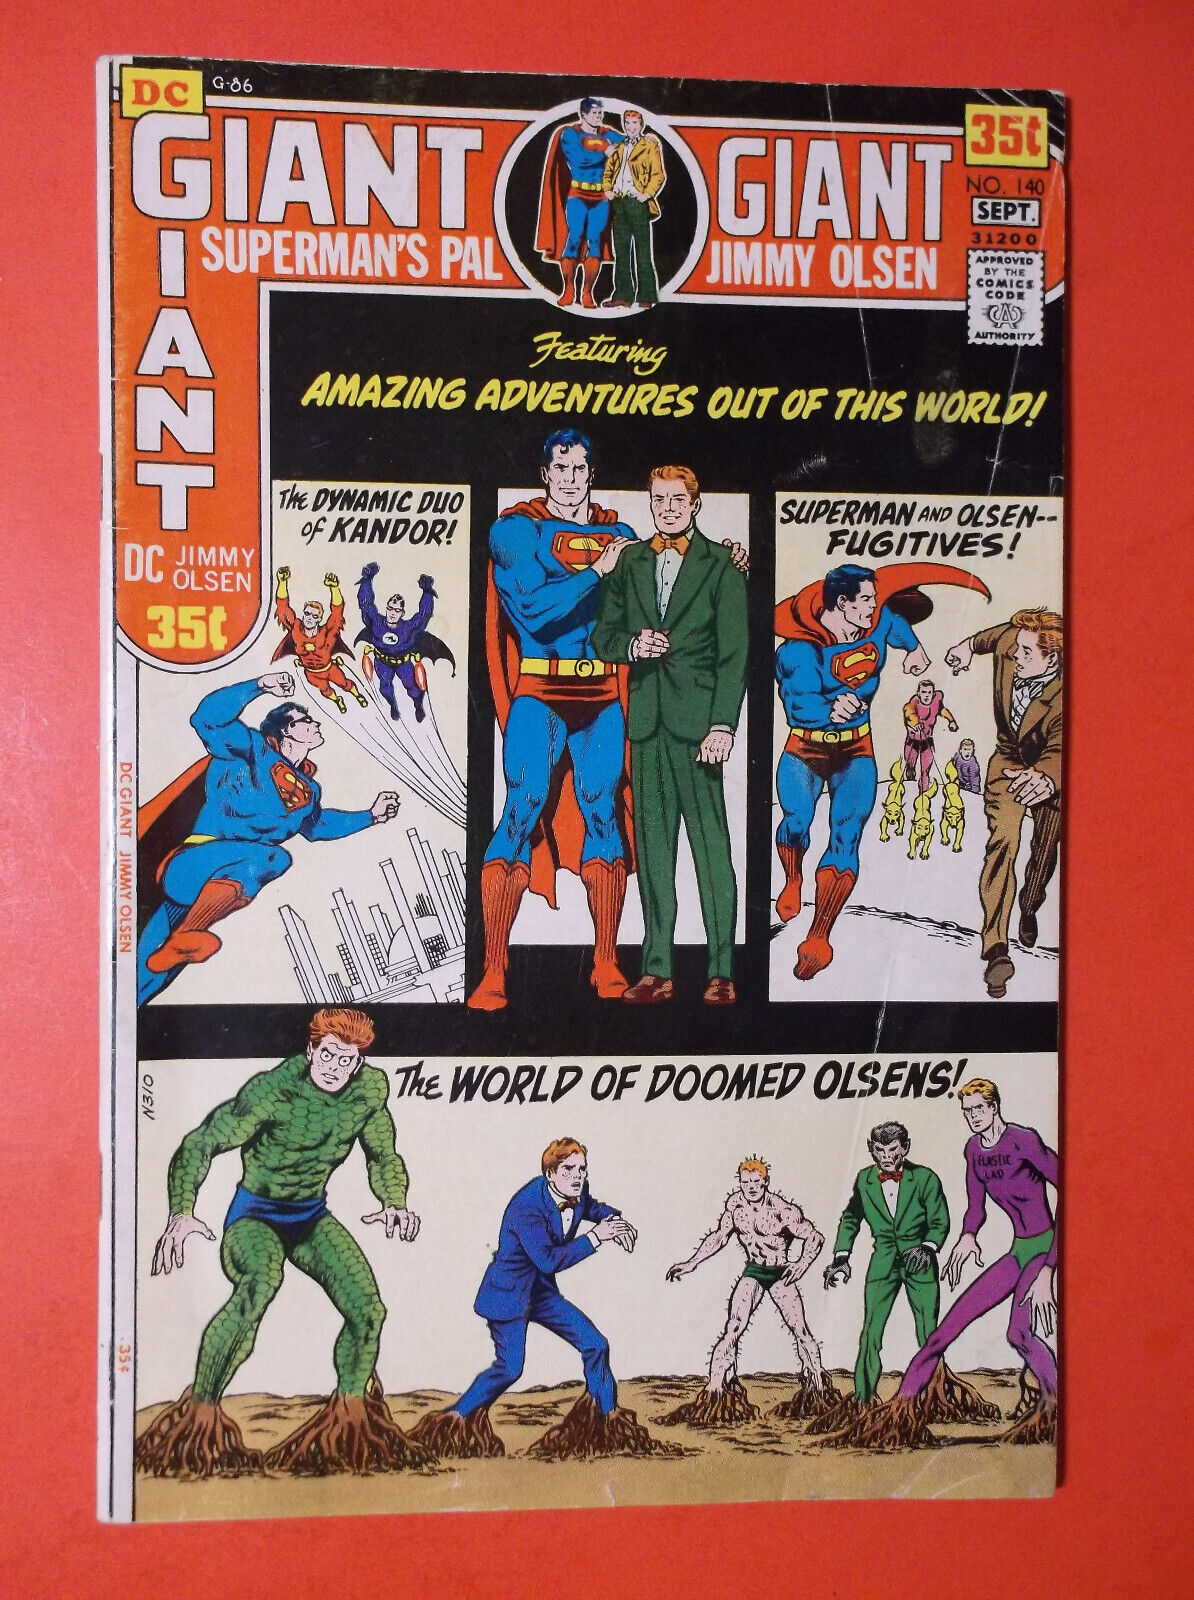 SUPERMAN'S PAL JIMMY OLSEN # 140 - VG 4.0 - 1971 68 PAGE GIANT   G-86